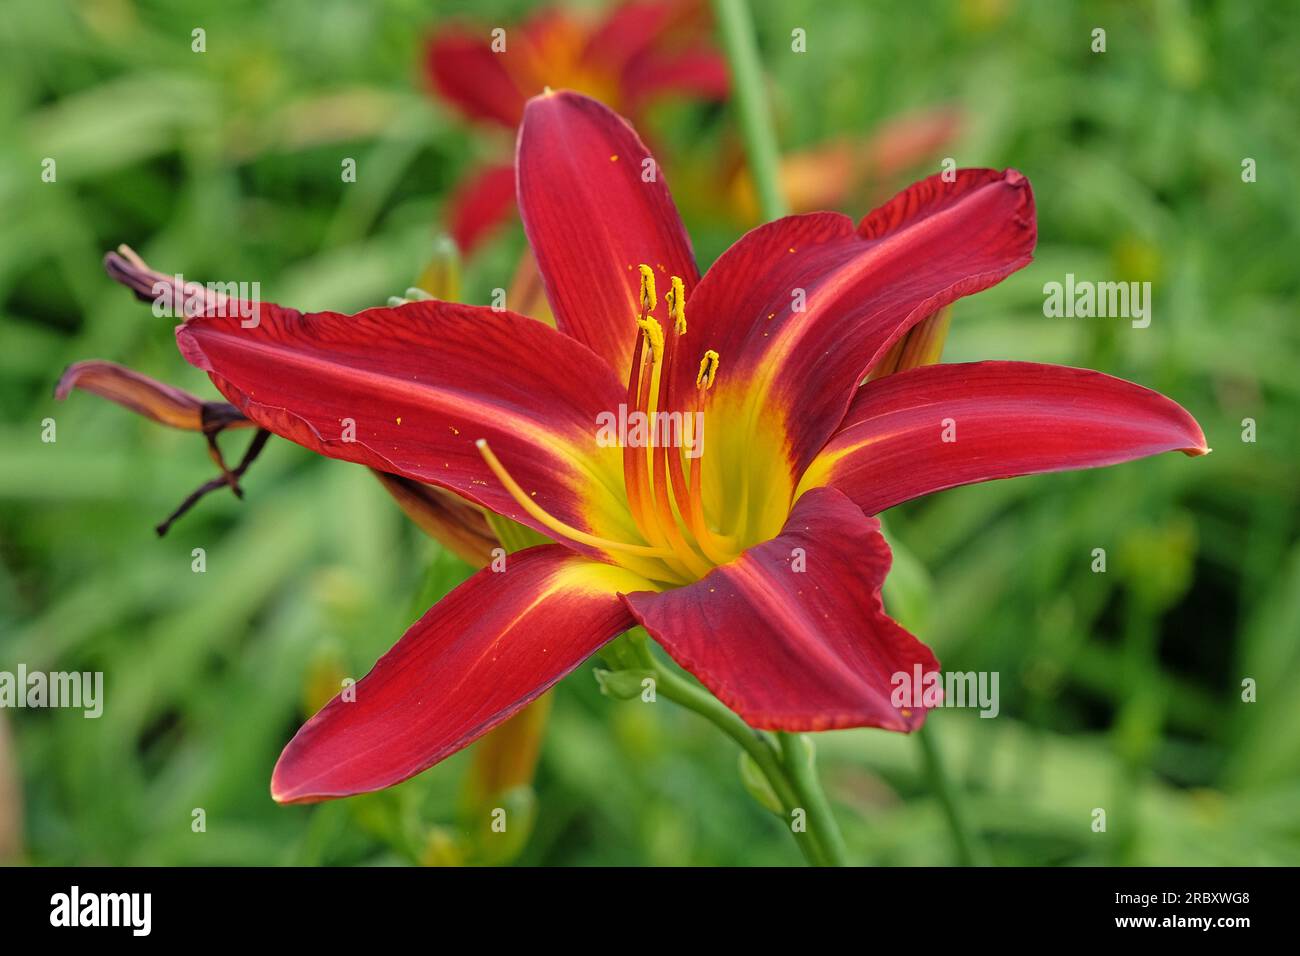 Hemerocallis hybrid daylily 'Stafford' in flower. Stock Photo